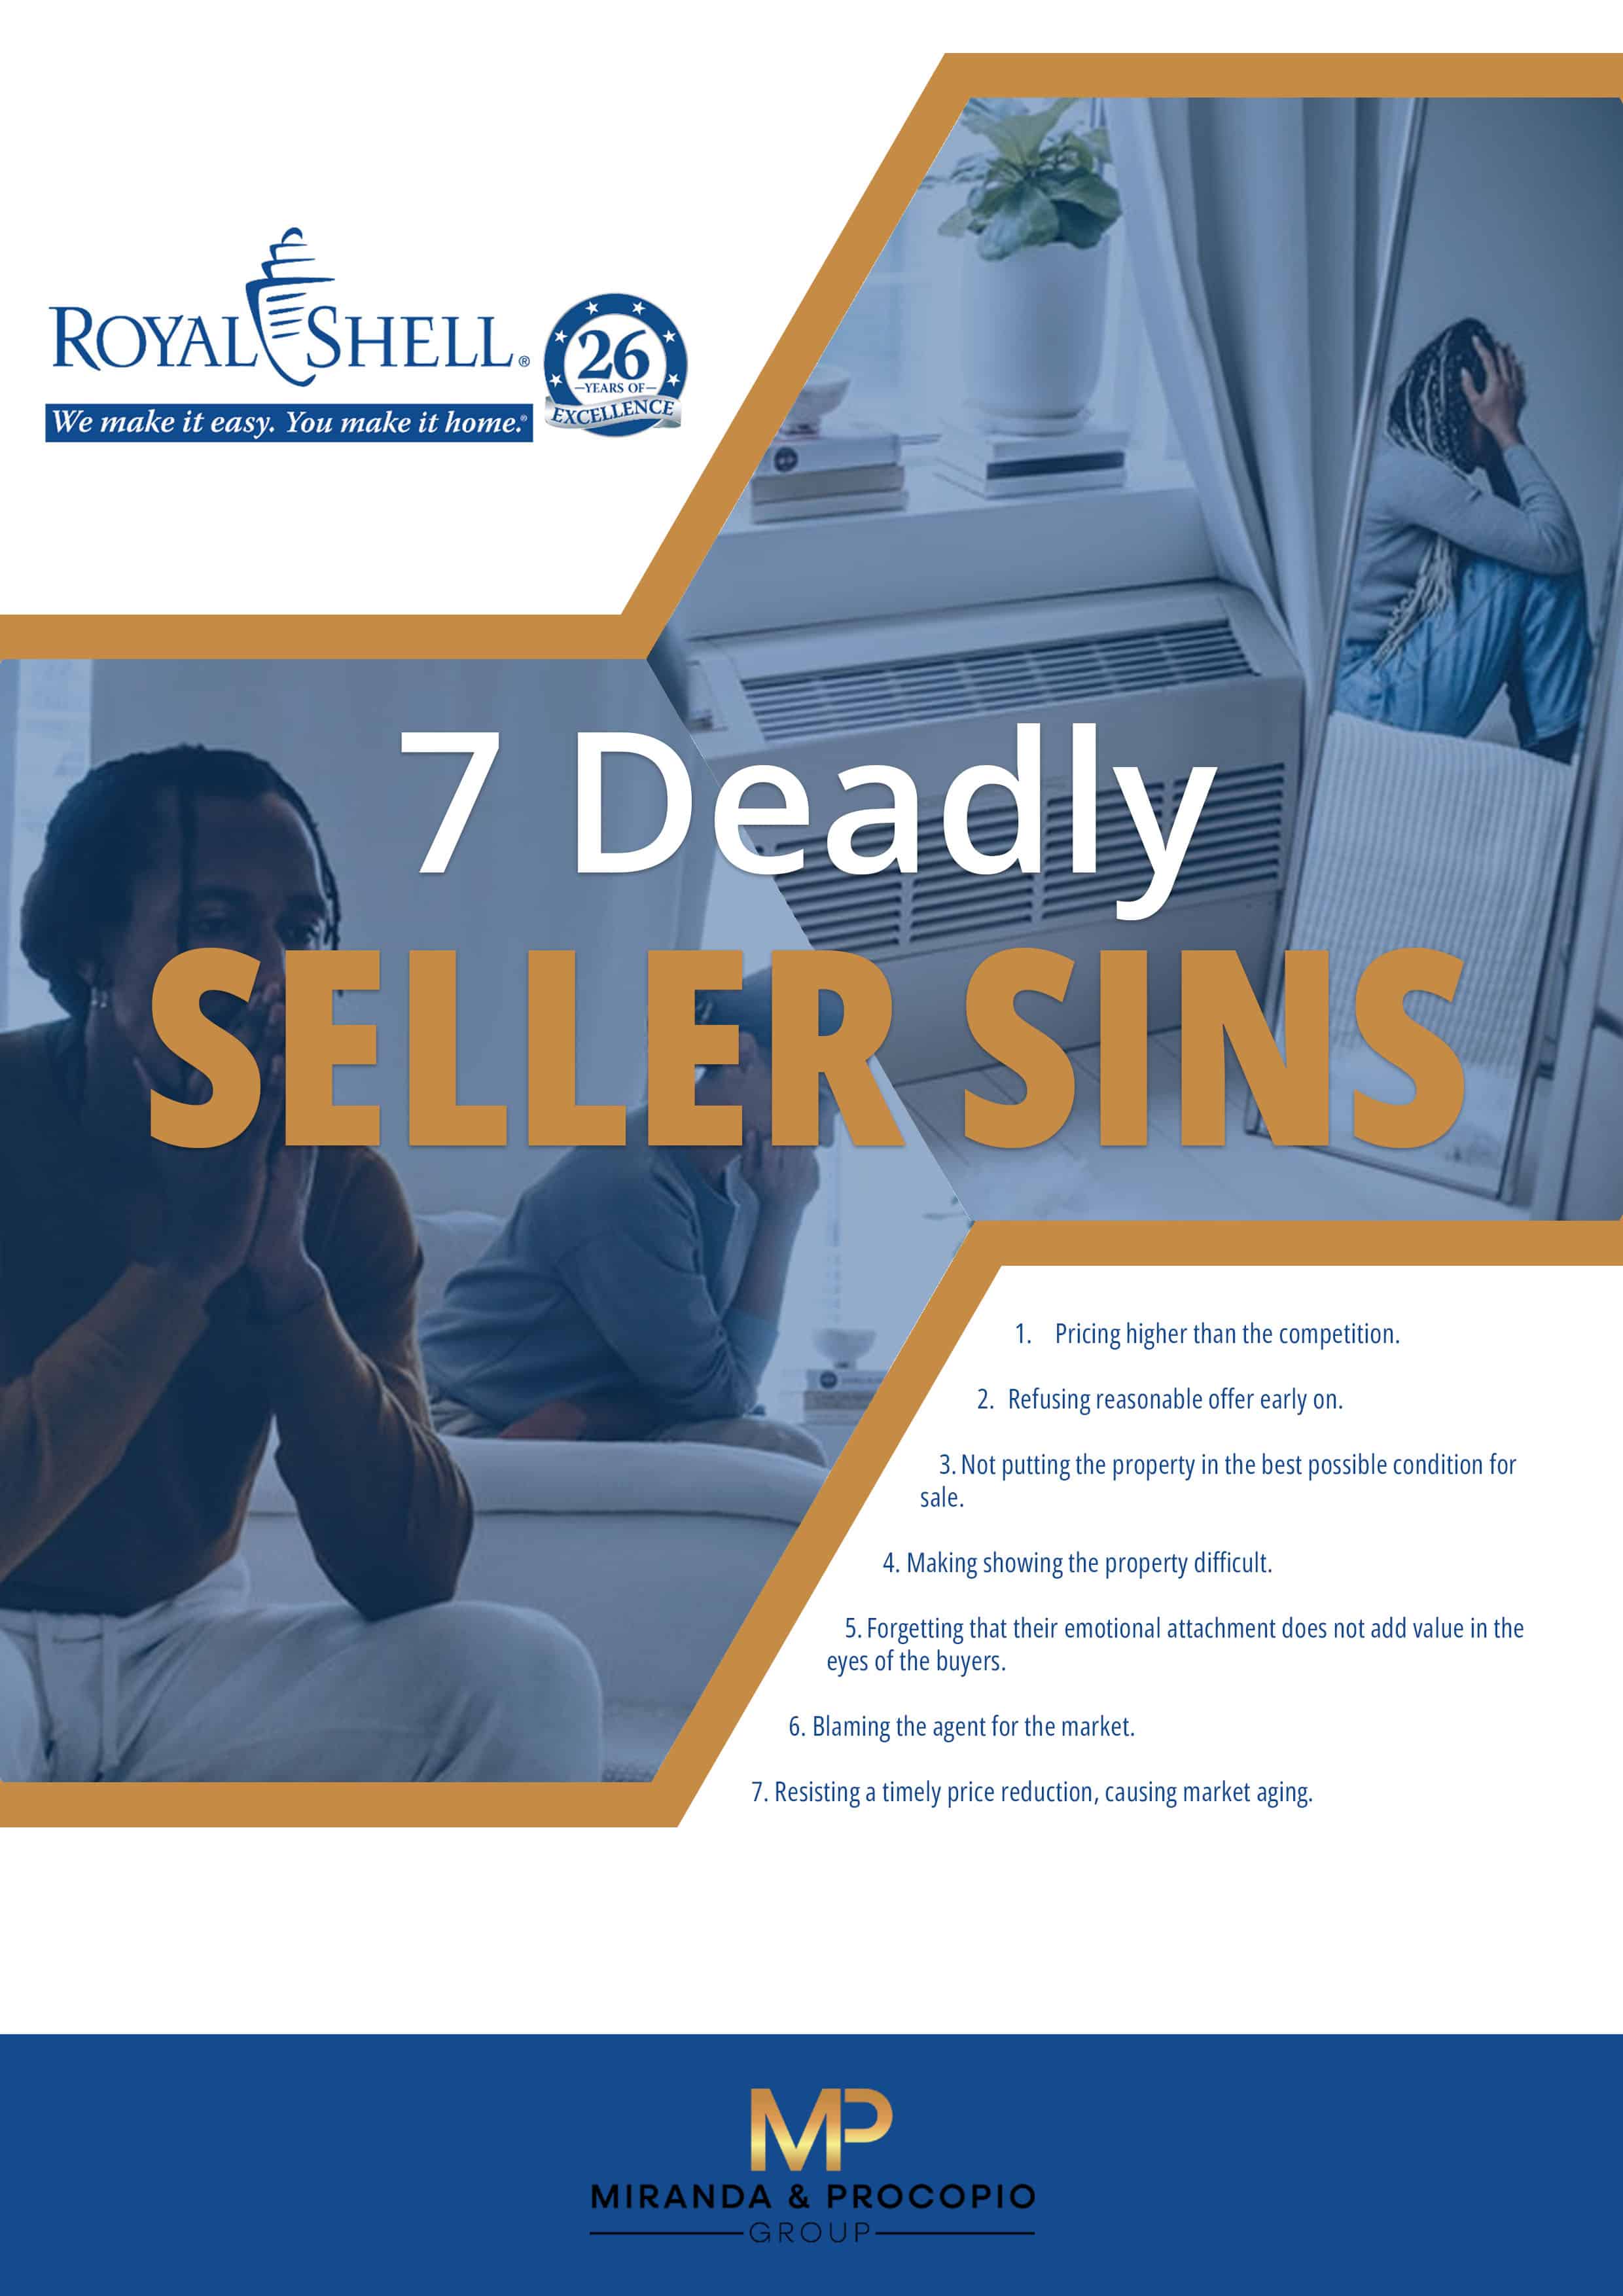 avoid these 7 deadly Seller sins